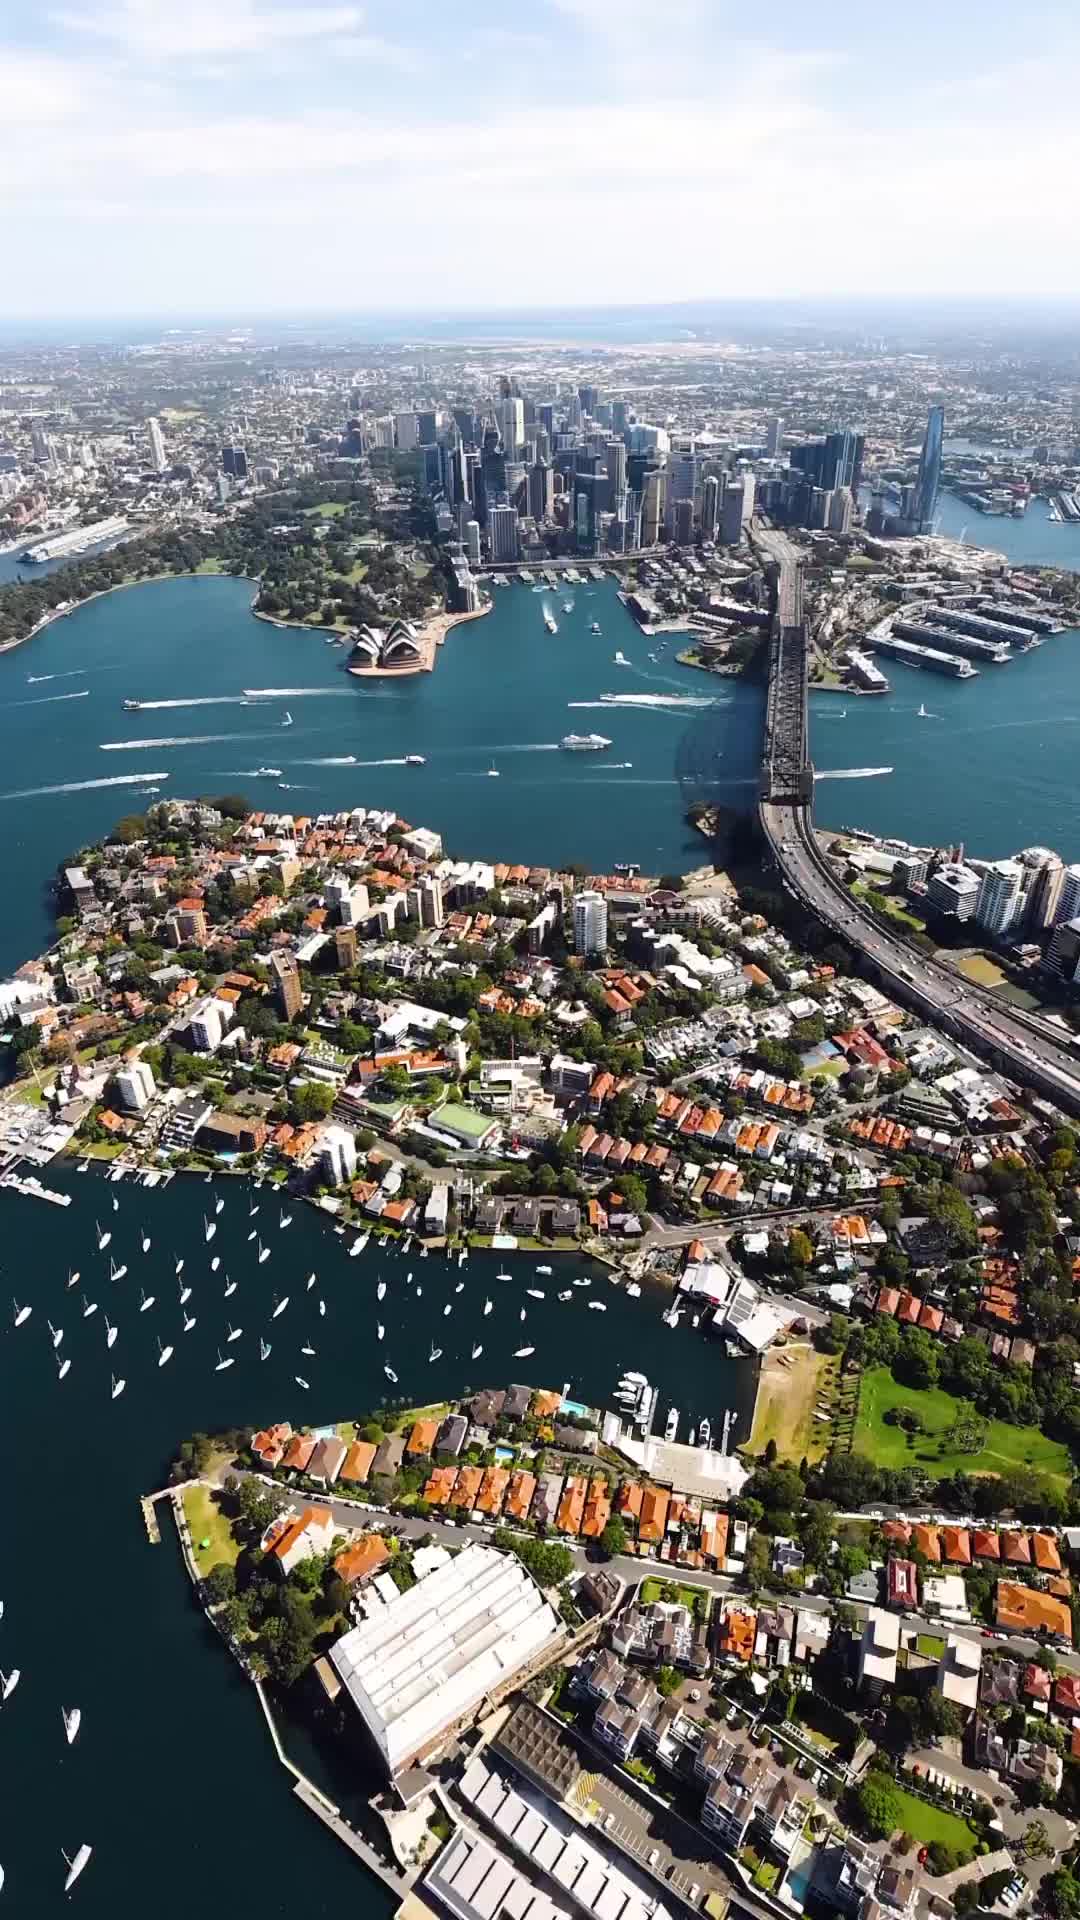 Sydney - One of the most beautiful cities in the world.

.
.
.
.
.
.
#sydney #ilovesydney #australia #seeaustralia  #reelit #beautifuldestinations 
.
 #reelitfeelit #bondibeach #reelsinstagram #artofvisuals #earthfocus #reelsvideo #reelinstagram #sydneyharbour #sydneyoperahouse #feelnsw #earthpix #thisisliving #canonaustralia #hellofrom